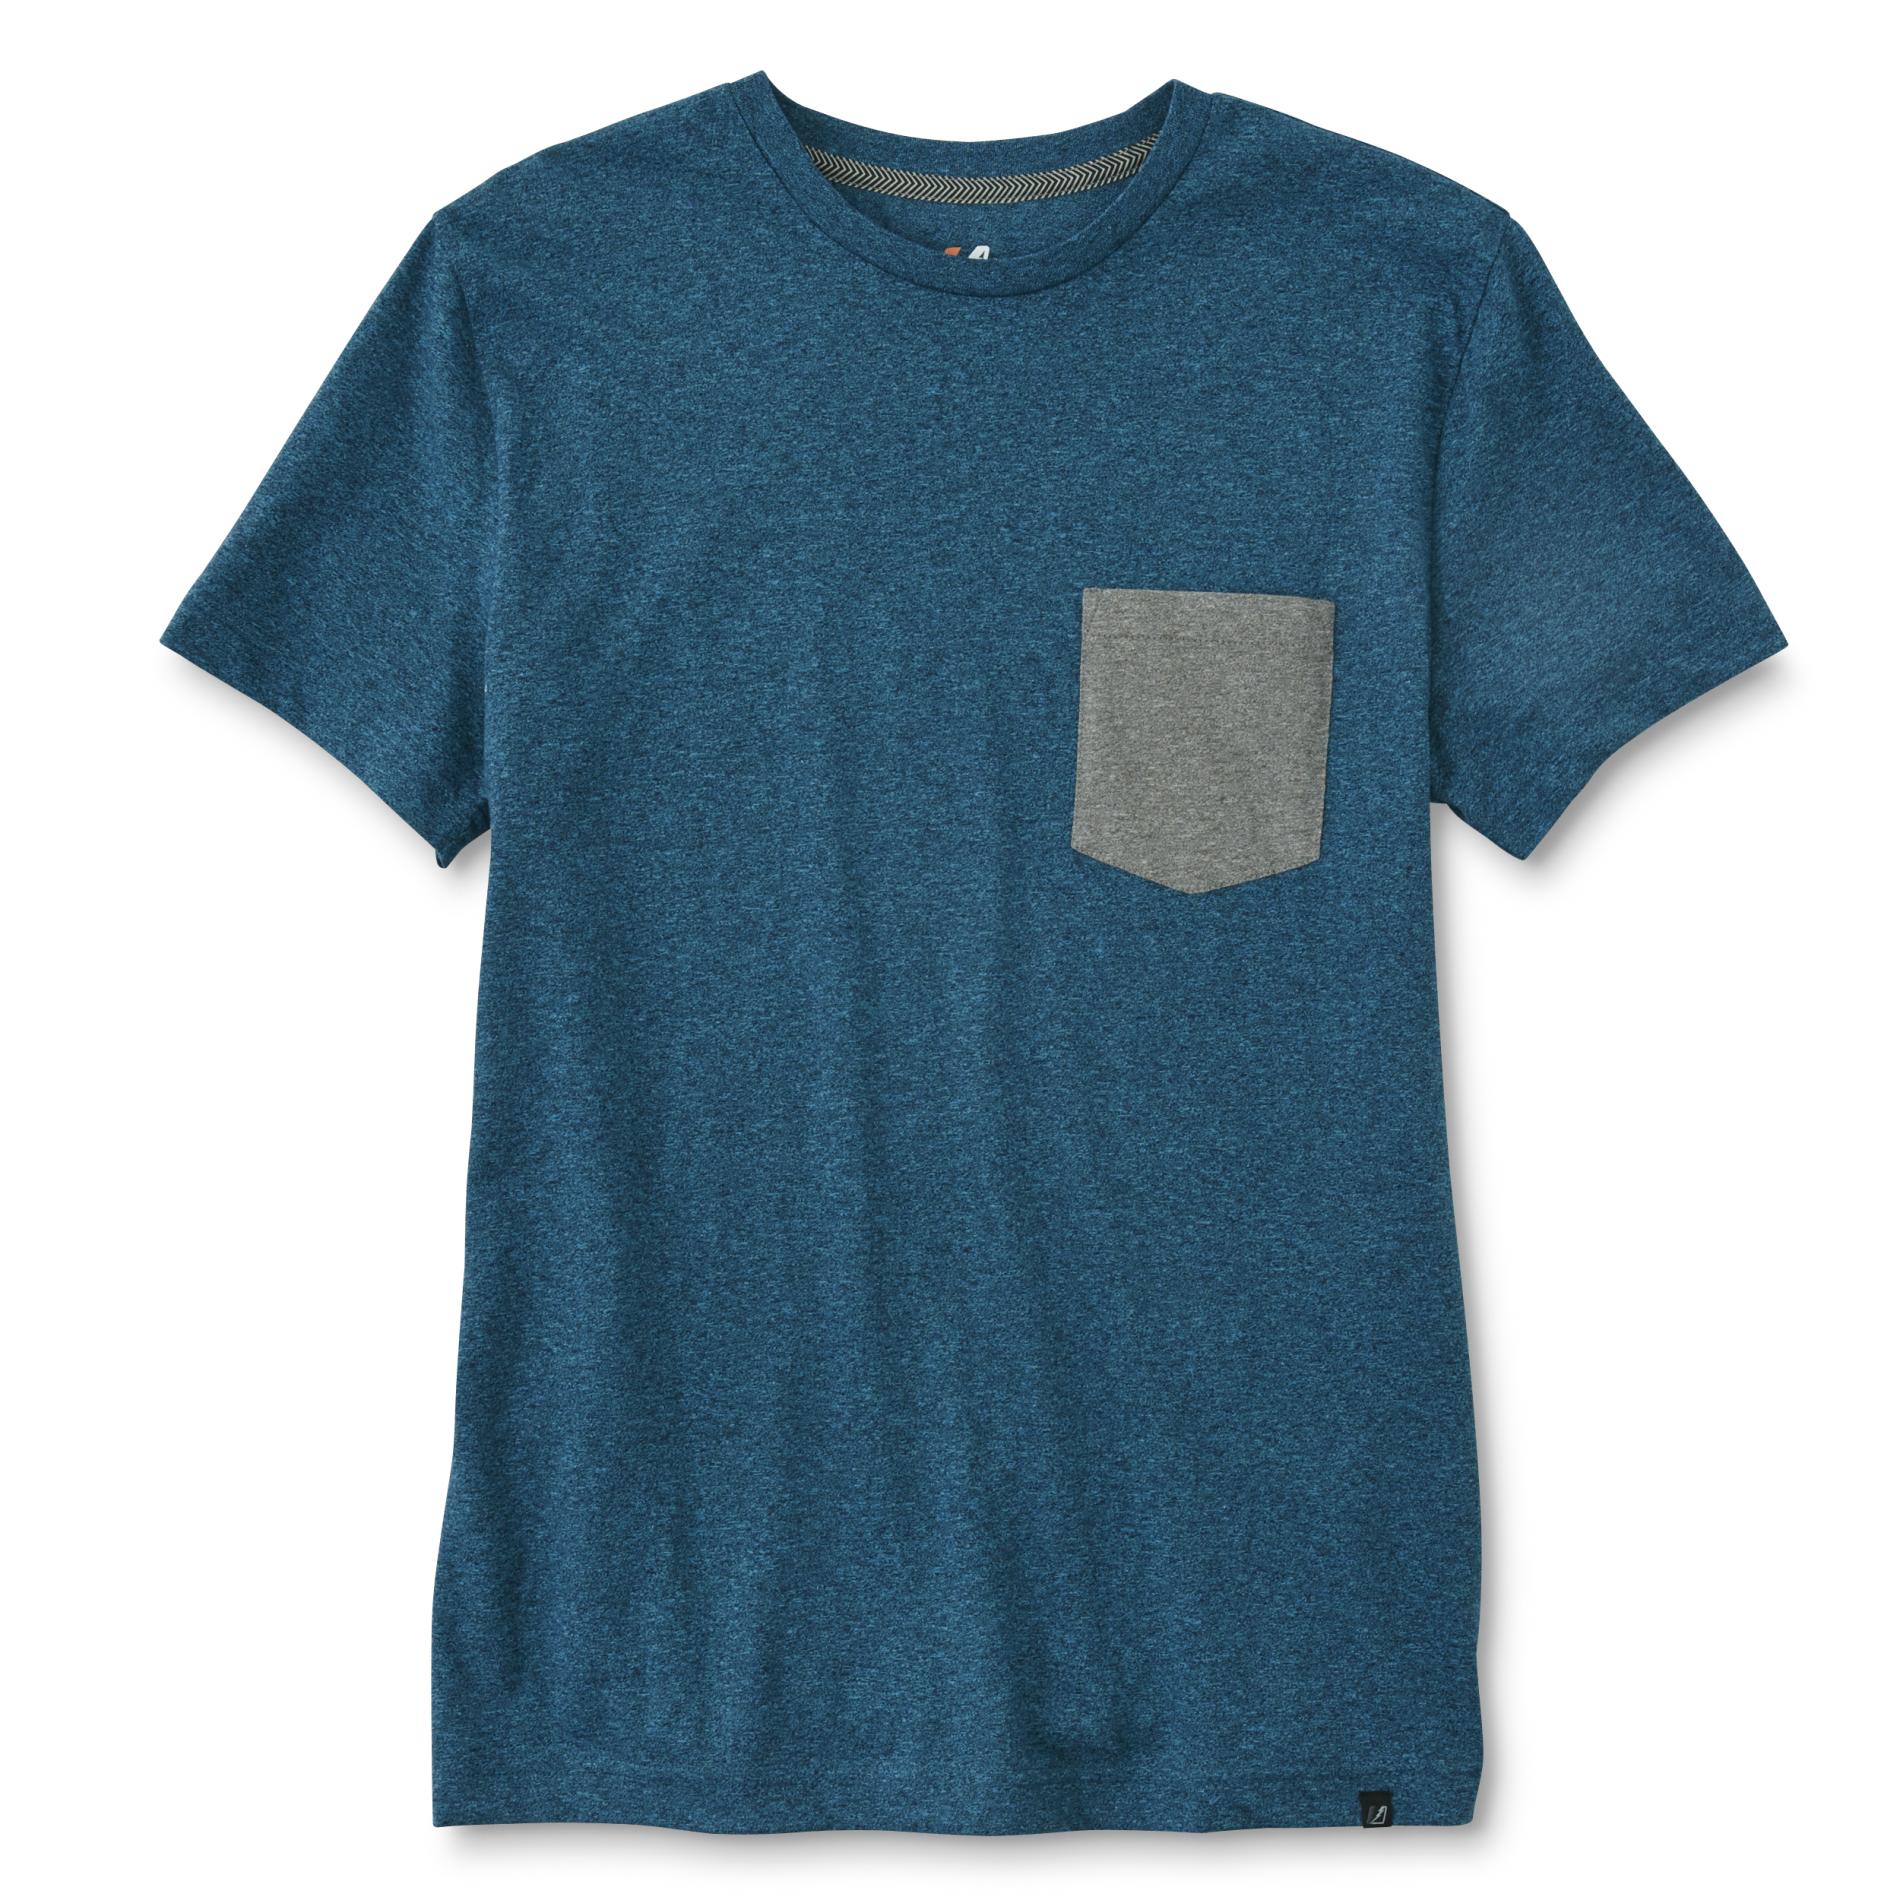 Amplify Young Men's Pocket T-Shirt - Colorblock